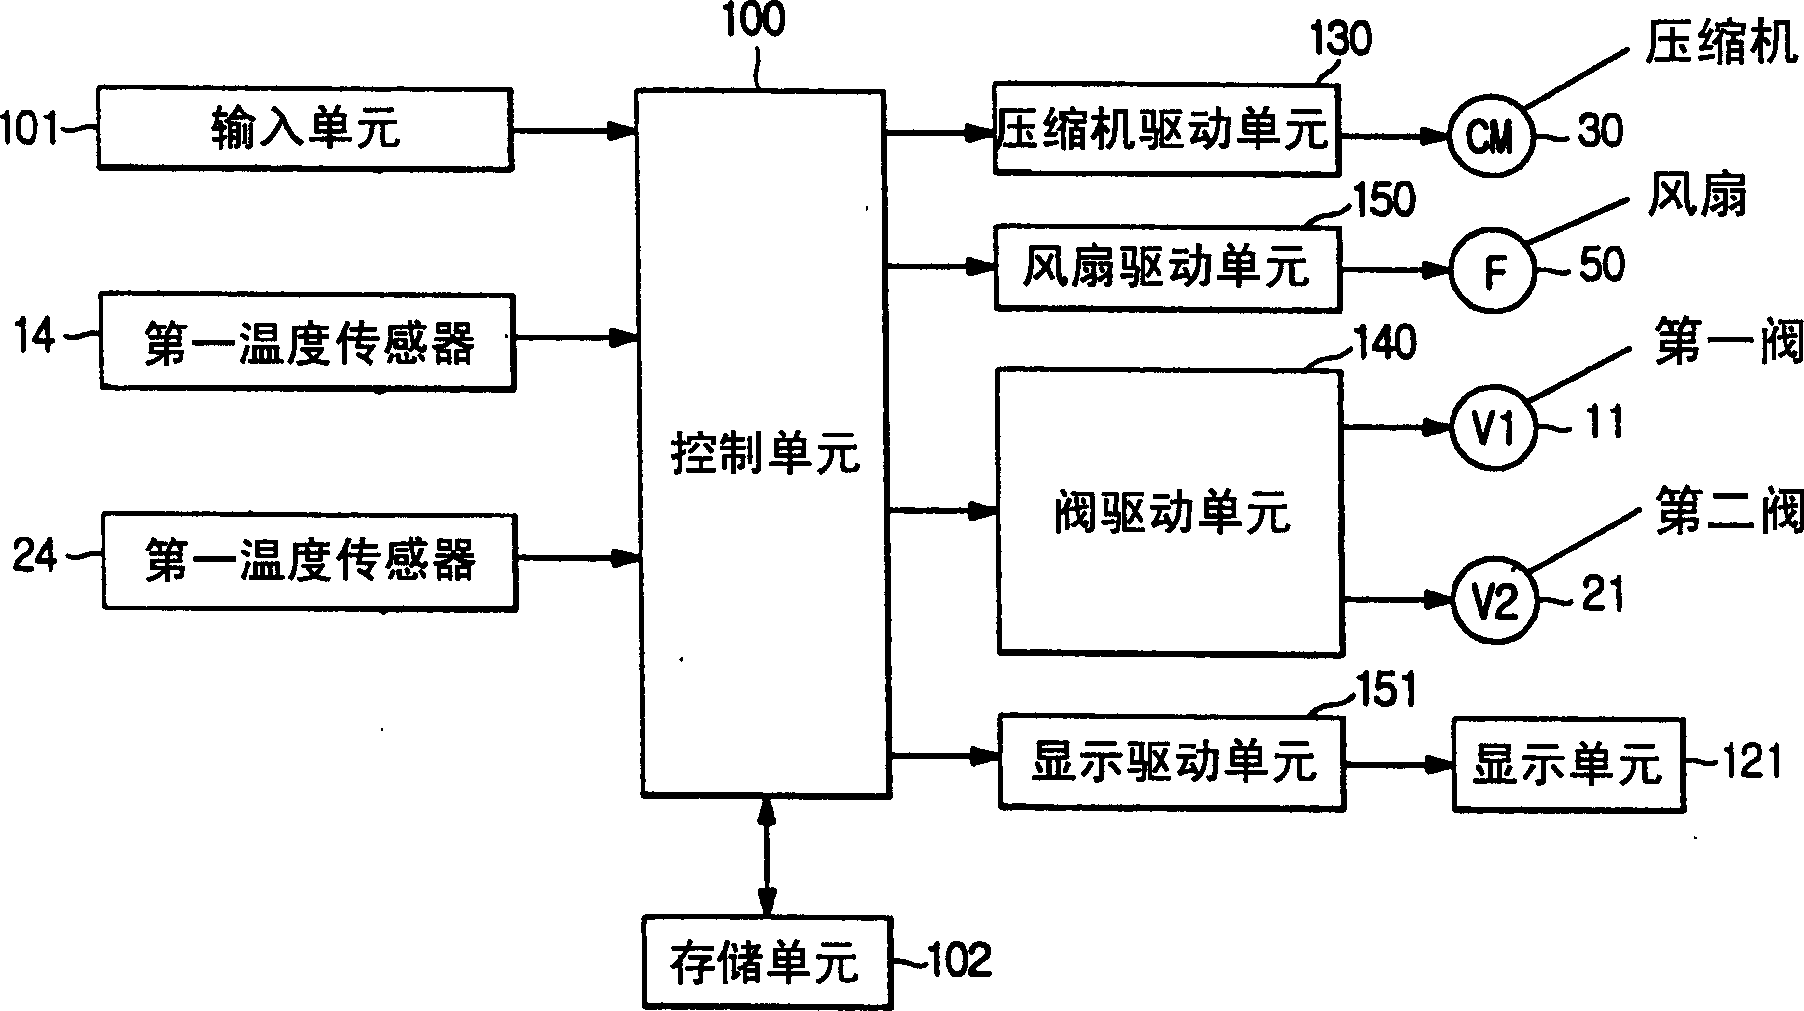 Control method for multi-chamber type kimchi refrigerator